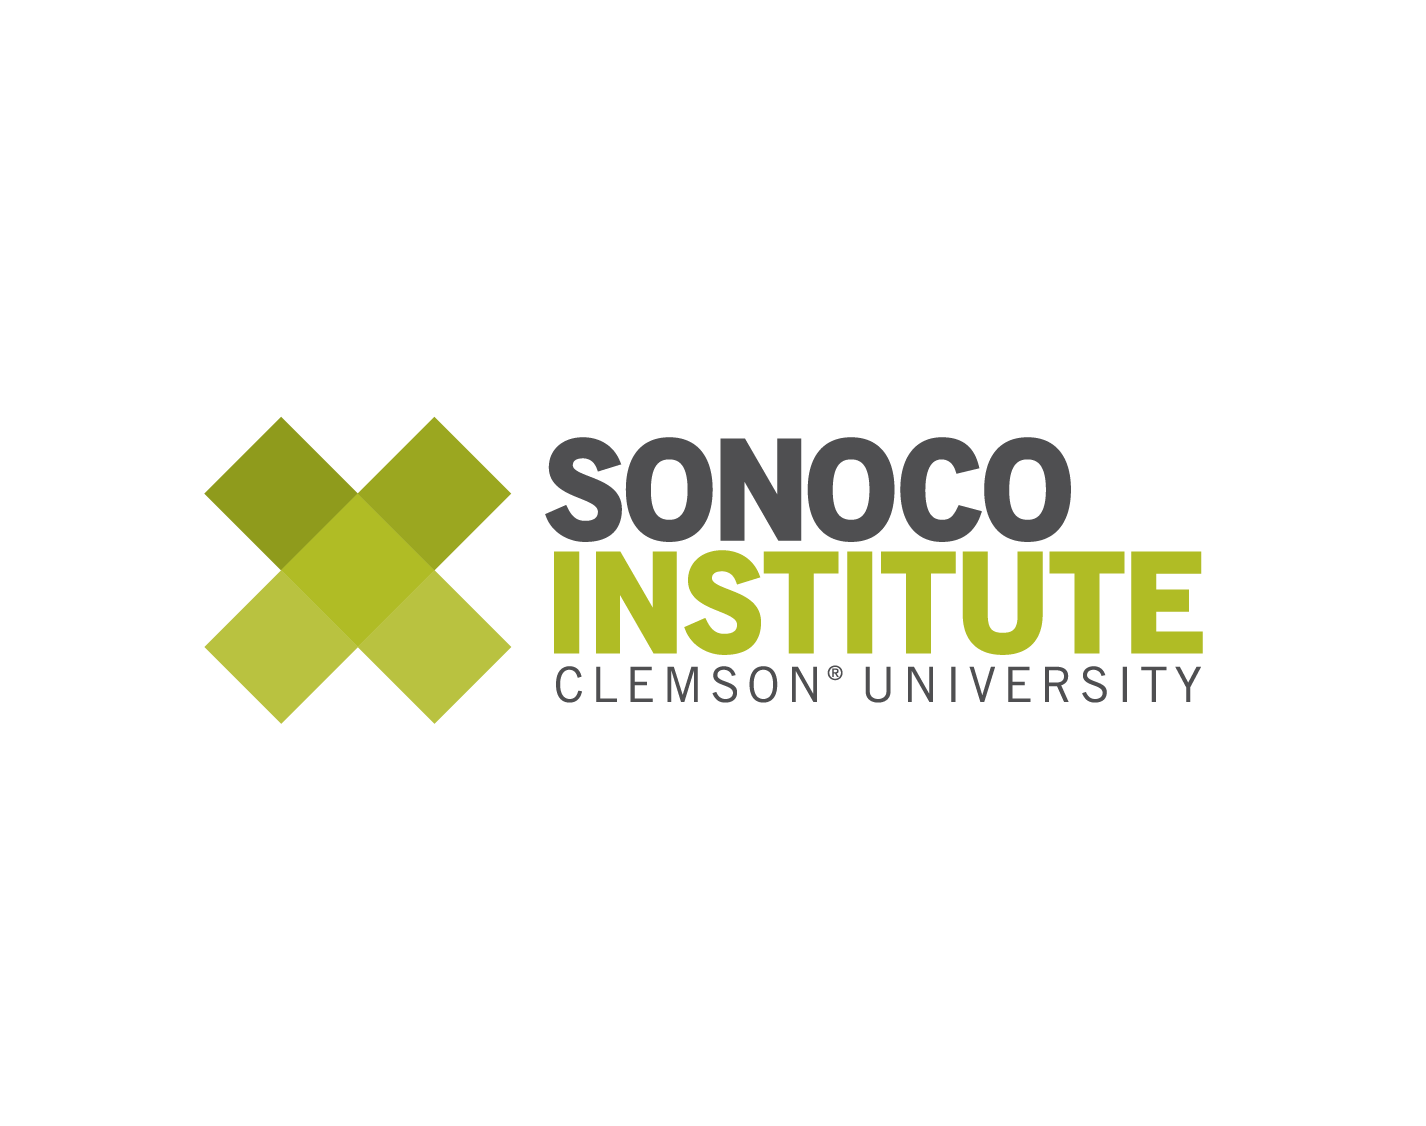 Sonoco Logo - Siegwerk Partners with Clemson University's Sonoco Institute to